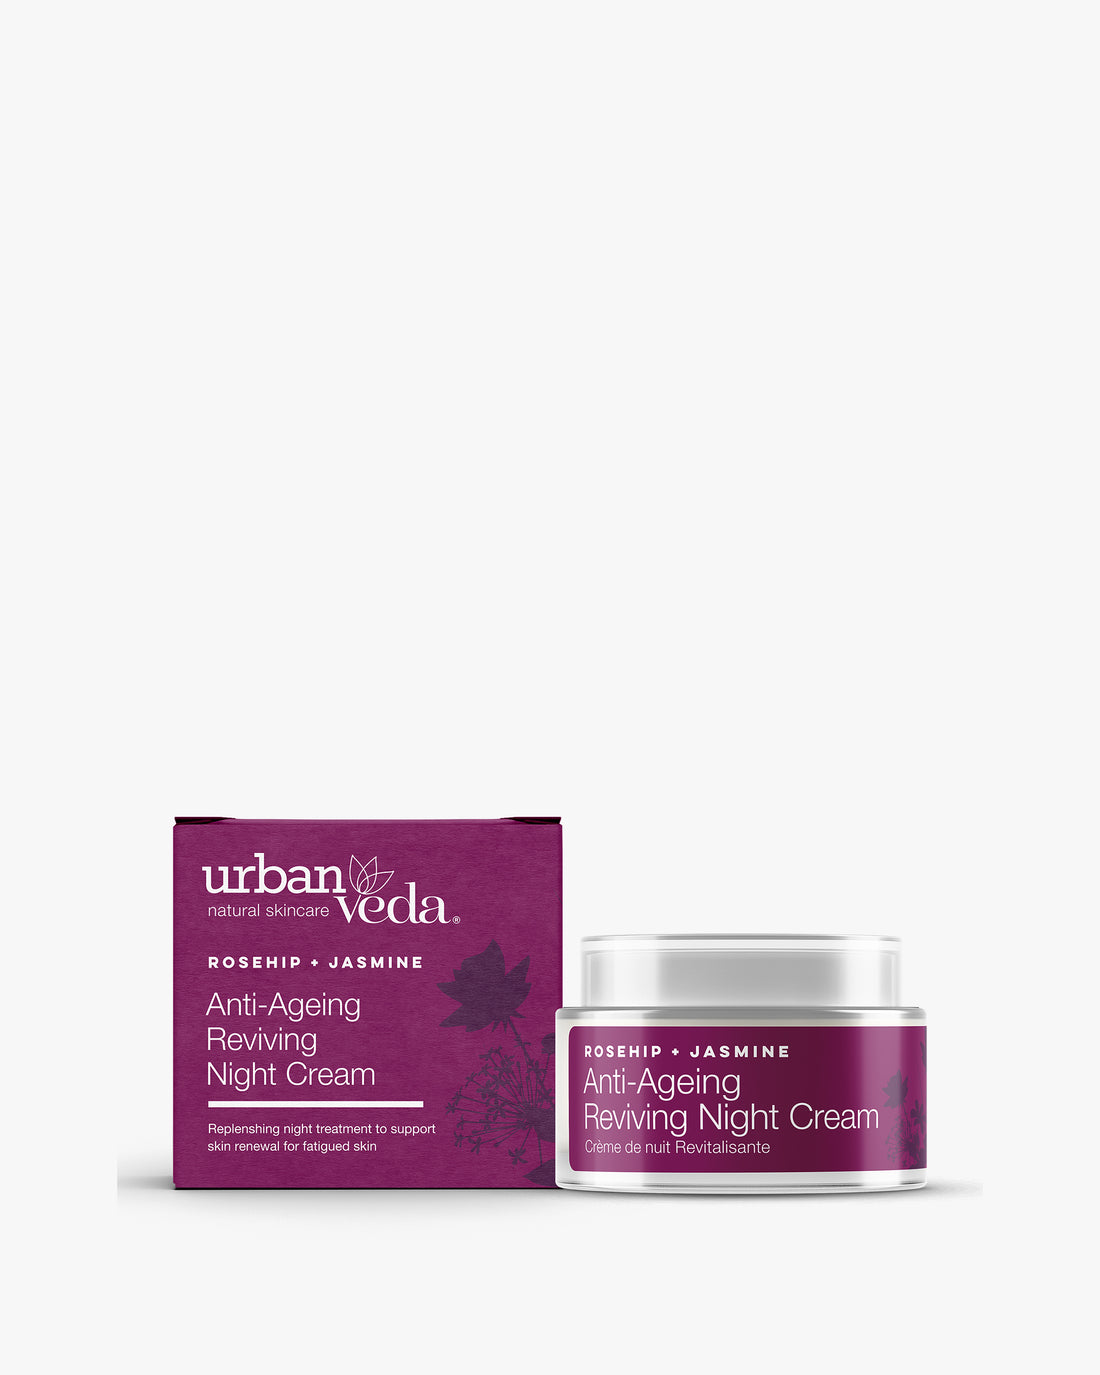 urban veda night cream